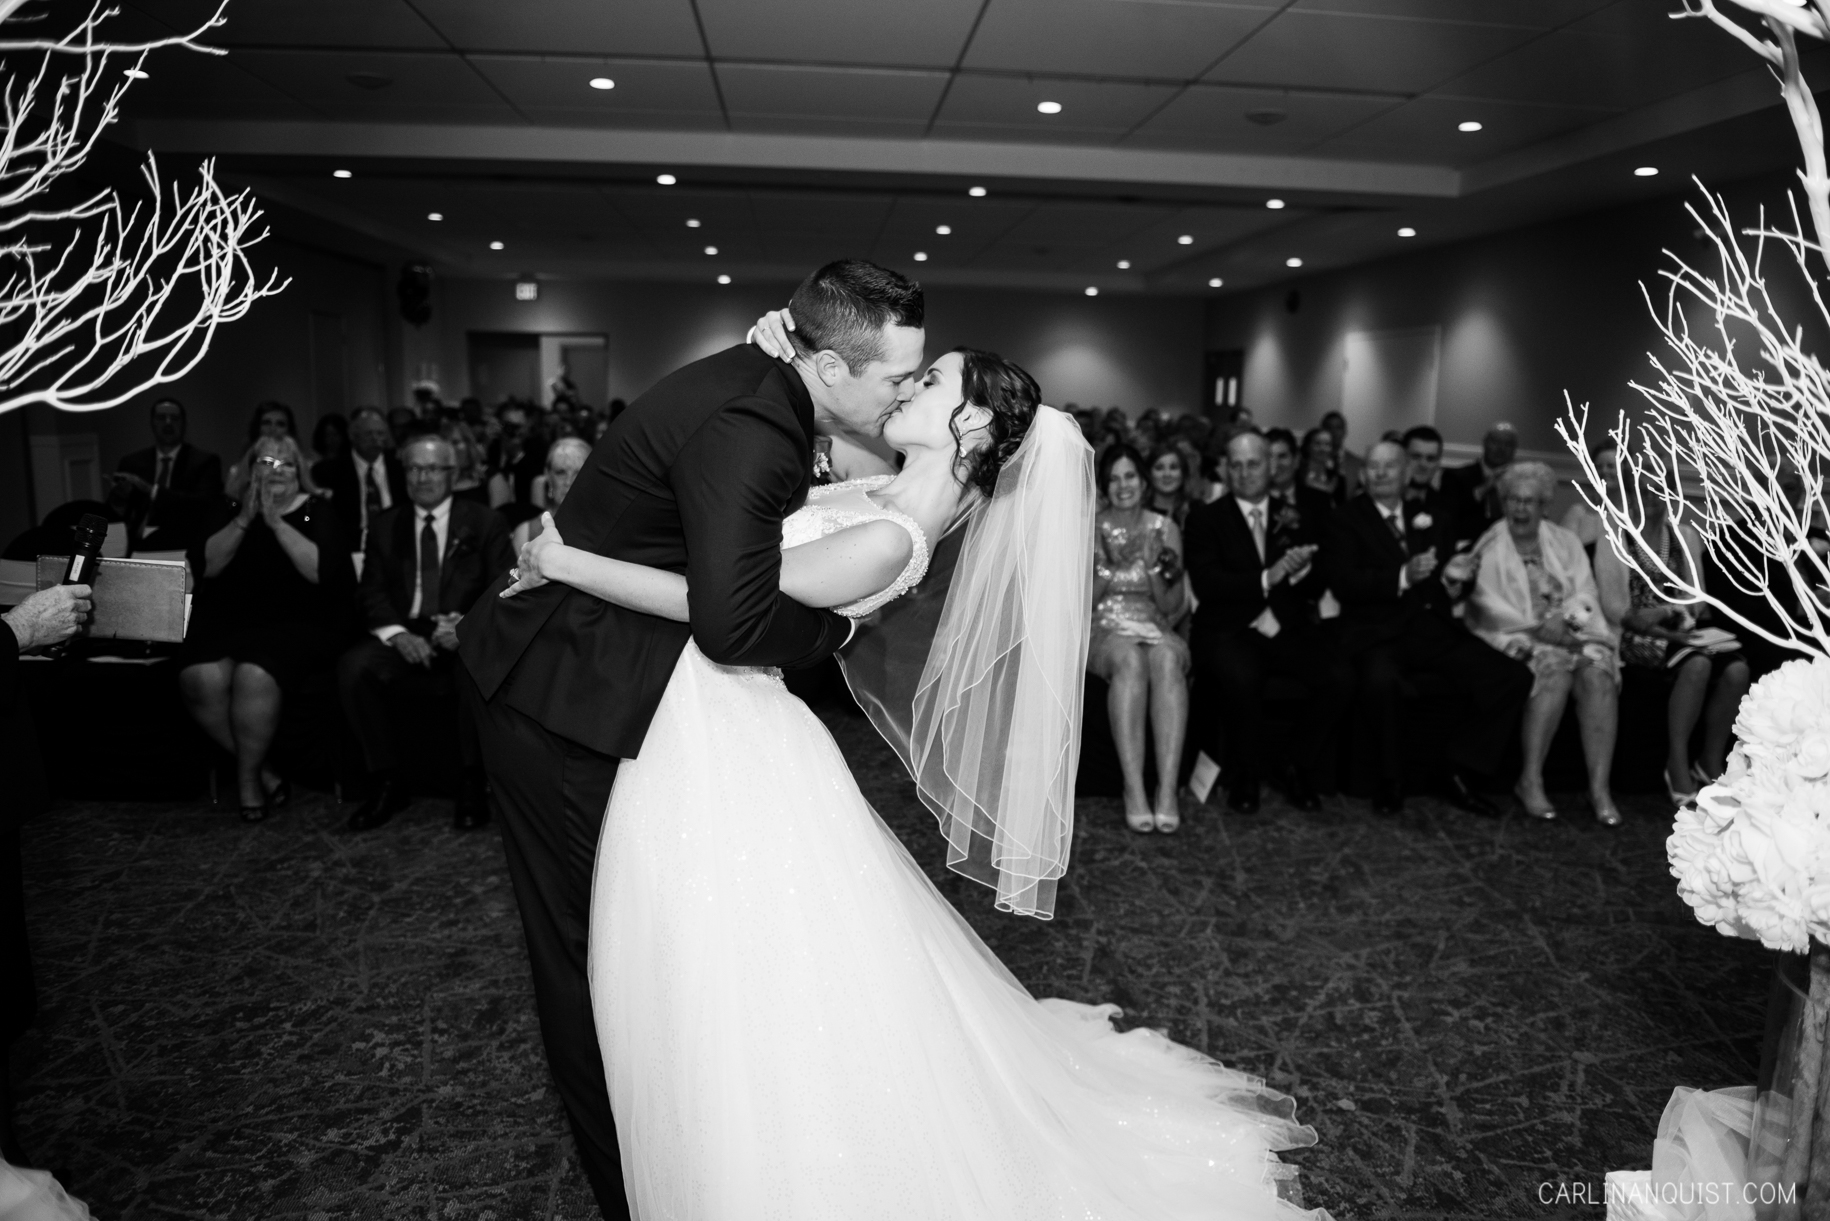 First Kiss | Calgary Winter Club Wedding Photographer